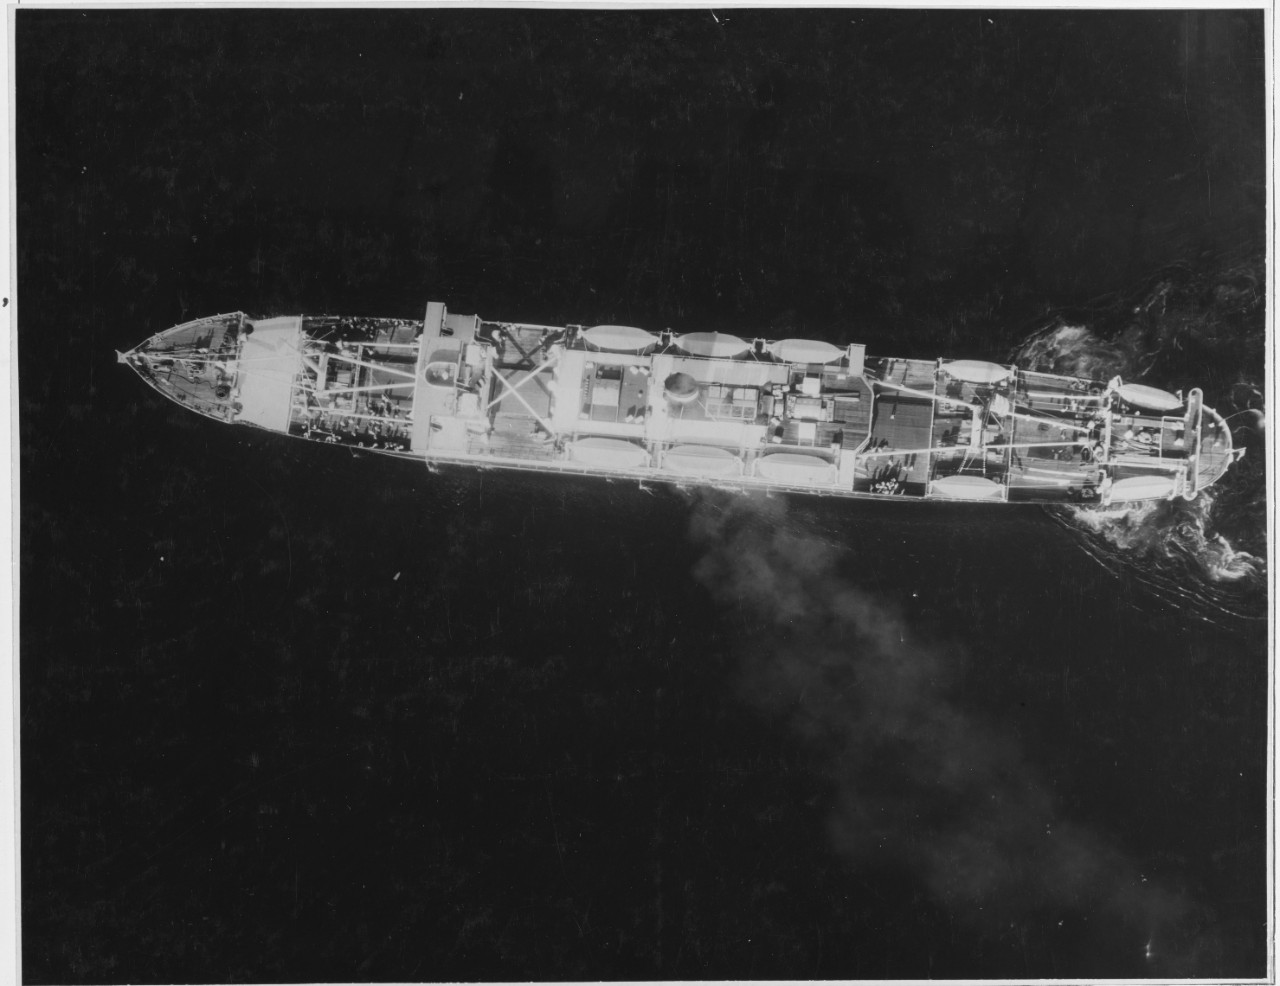 Japanese ship: MONTEVIDEO MARU, August 17, 1937